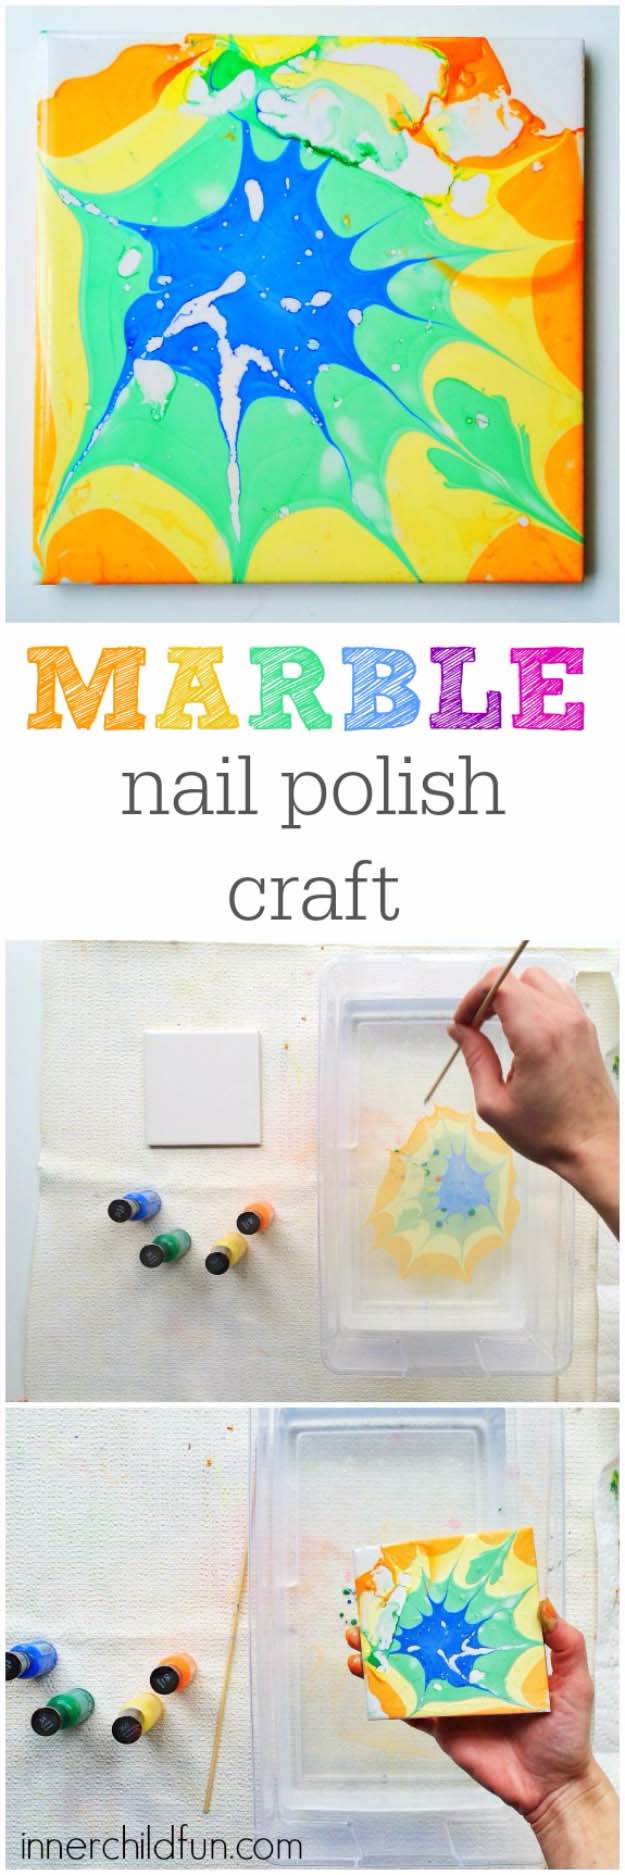 DIY Crafts Using Nail Polish - Fun, Cool, Easy and Cheap Craft Ideas for Girls, Teens, Tweens and Adults | Marble Nail Polish Craft